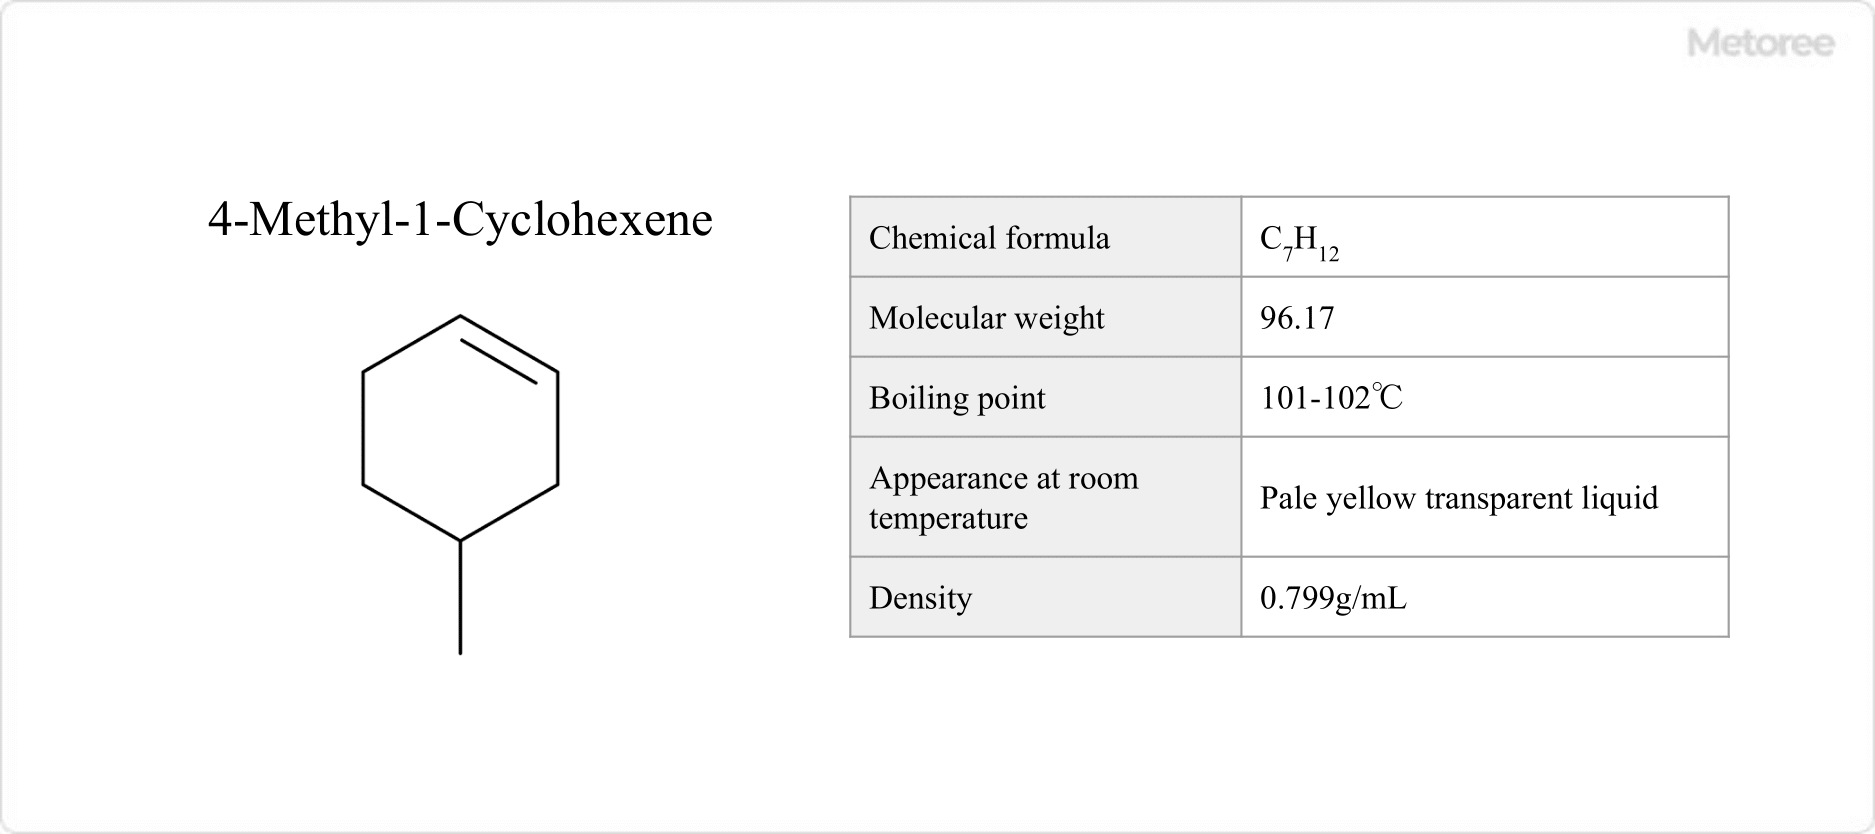 Figure 3. Basic information on 4-methyl-1-cyclohexene